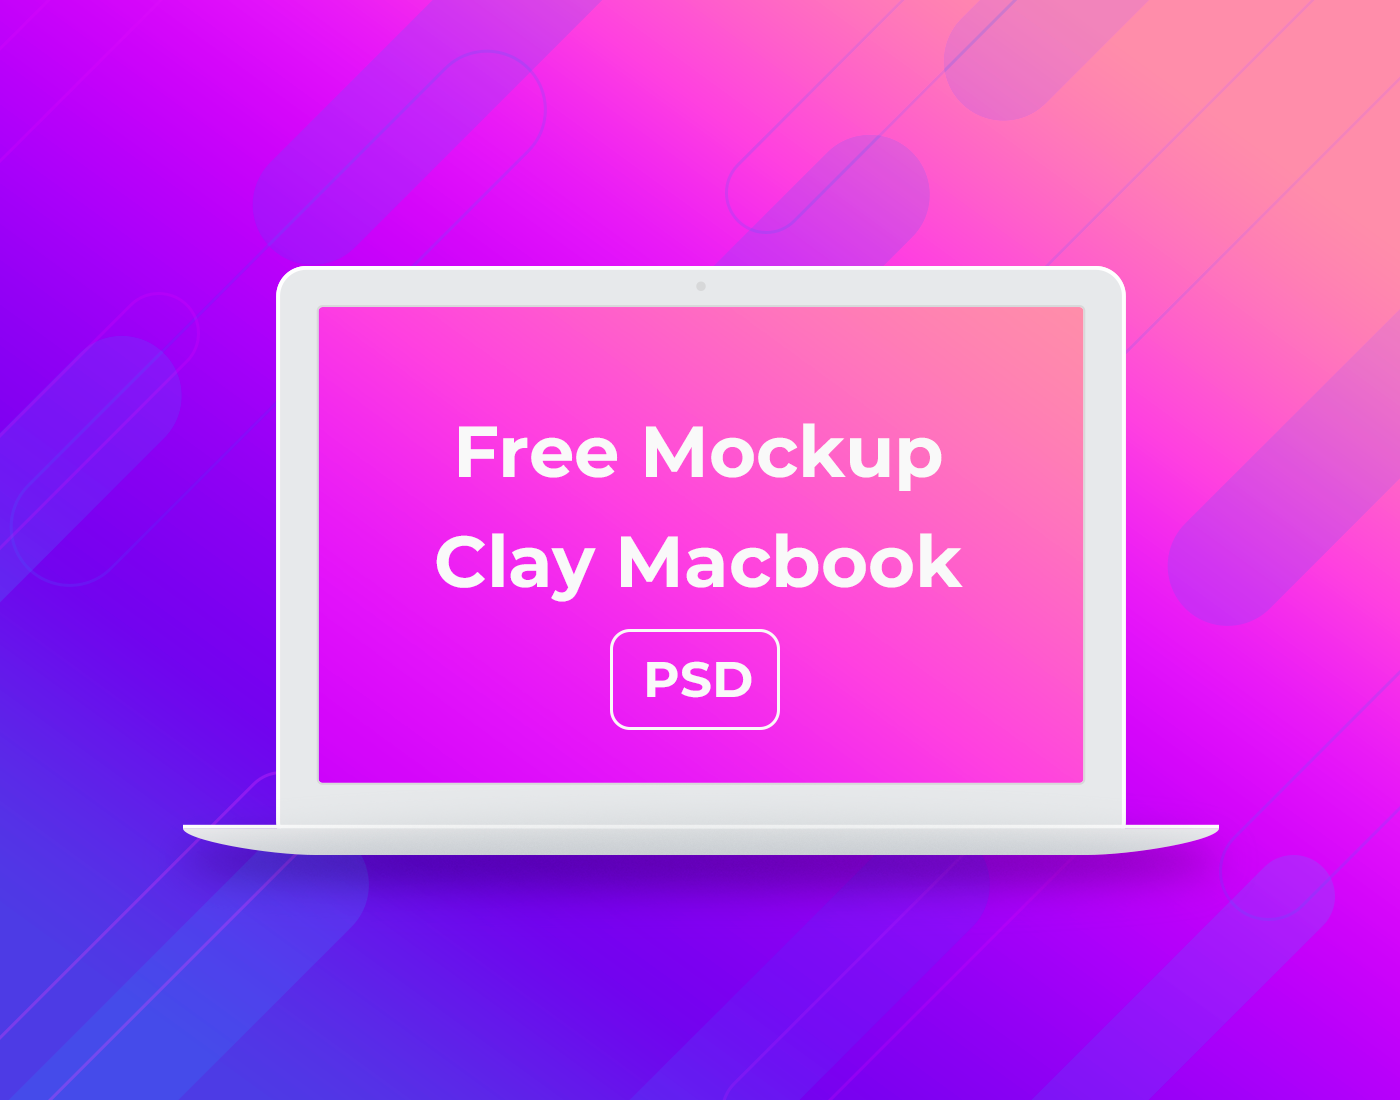 A free clay macbook mockup